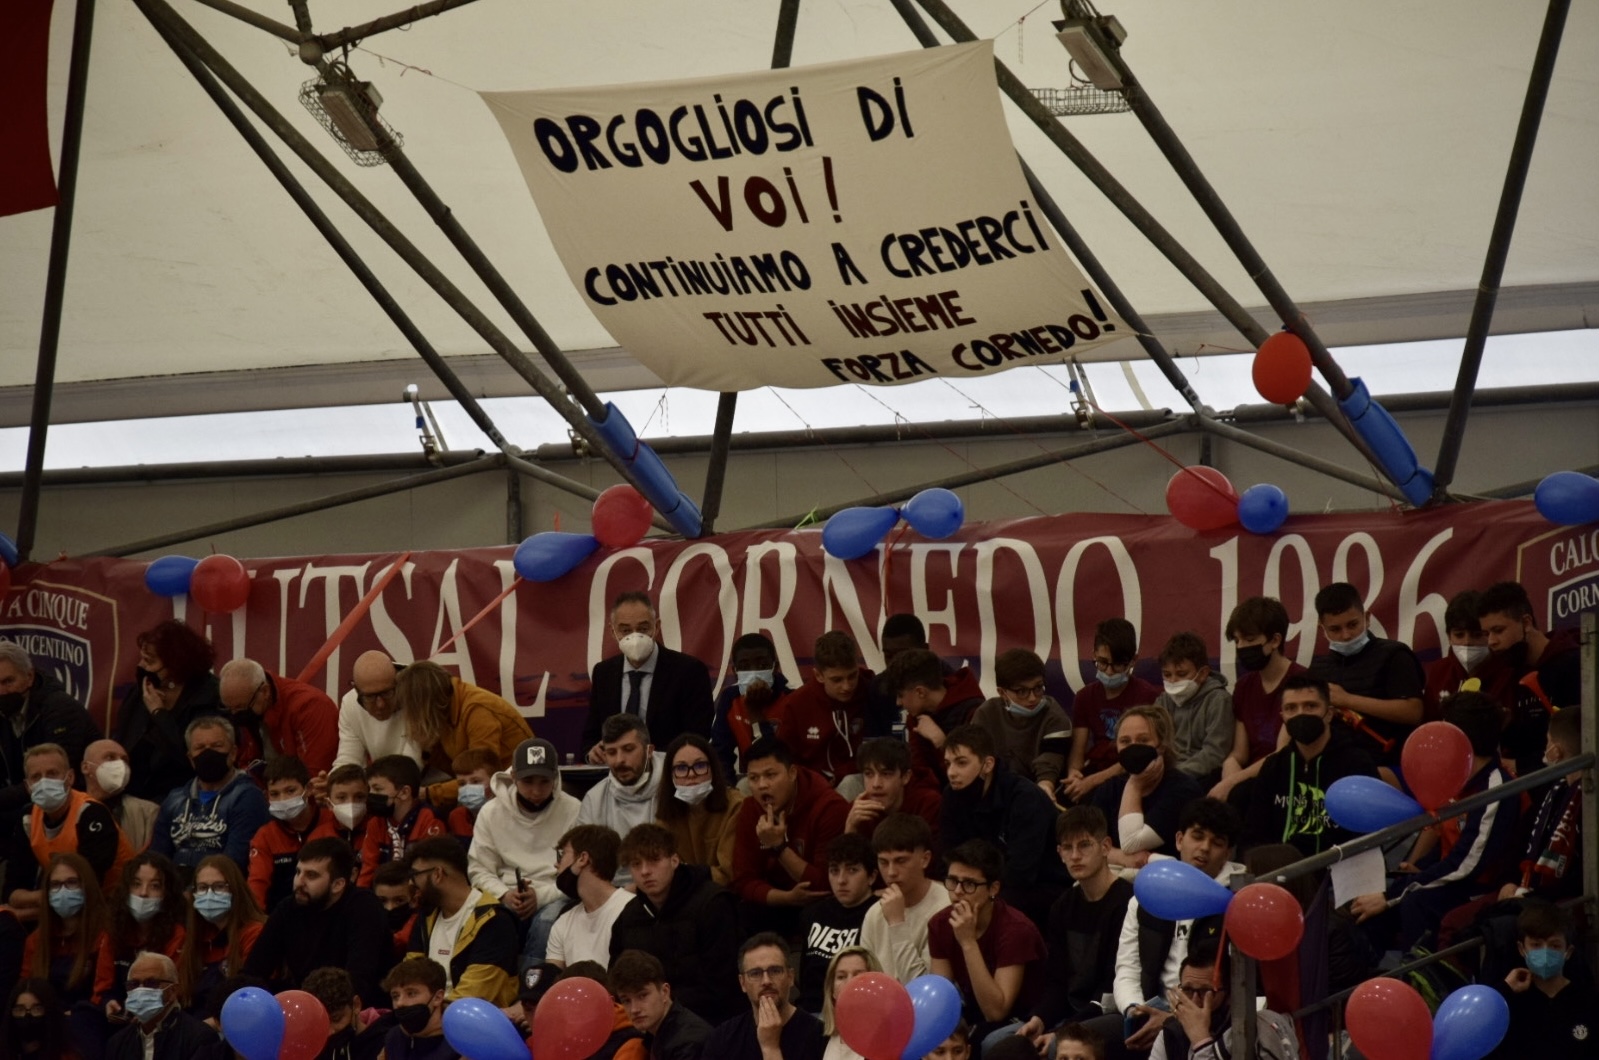 SERIE B CALCIO A 5. Futsal Cornedo vince a Belluno e si garantisce almeno una gara interna ai playoff!